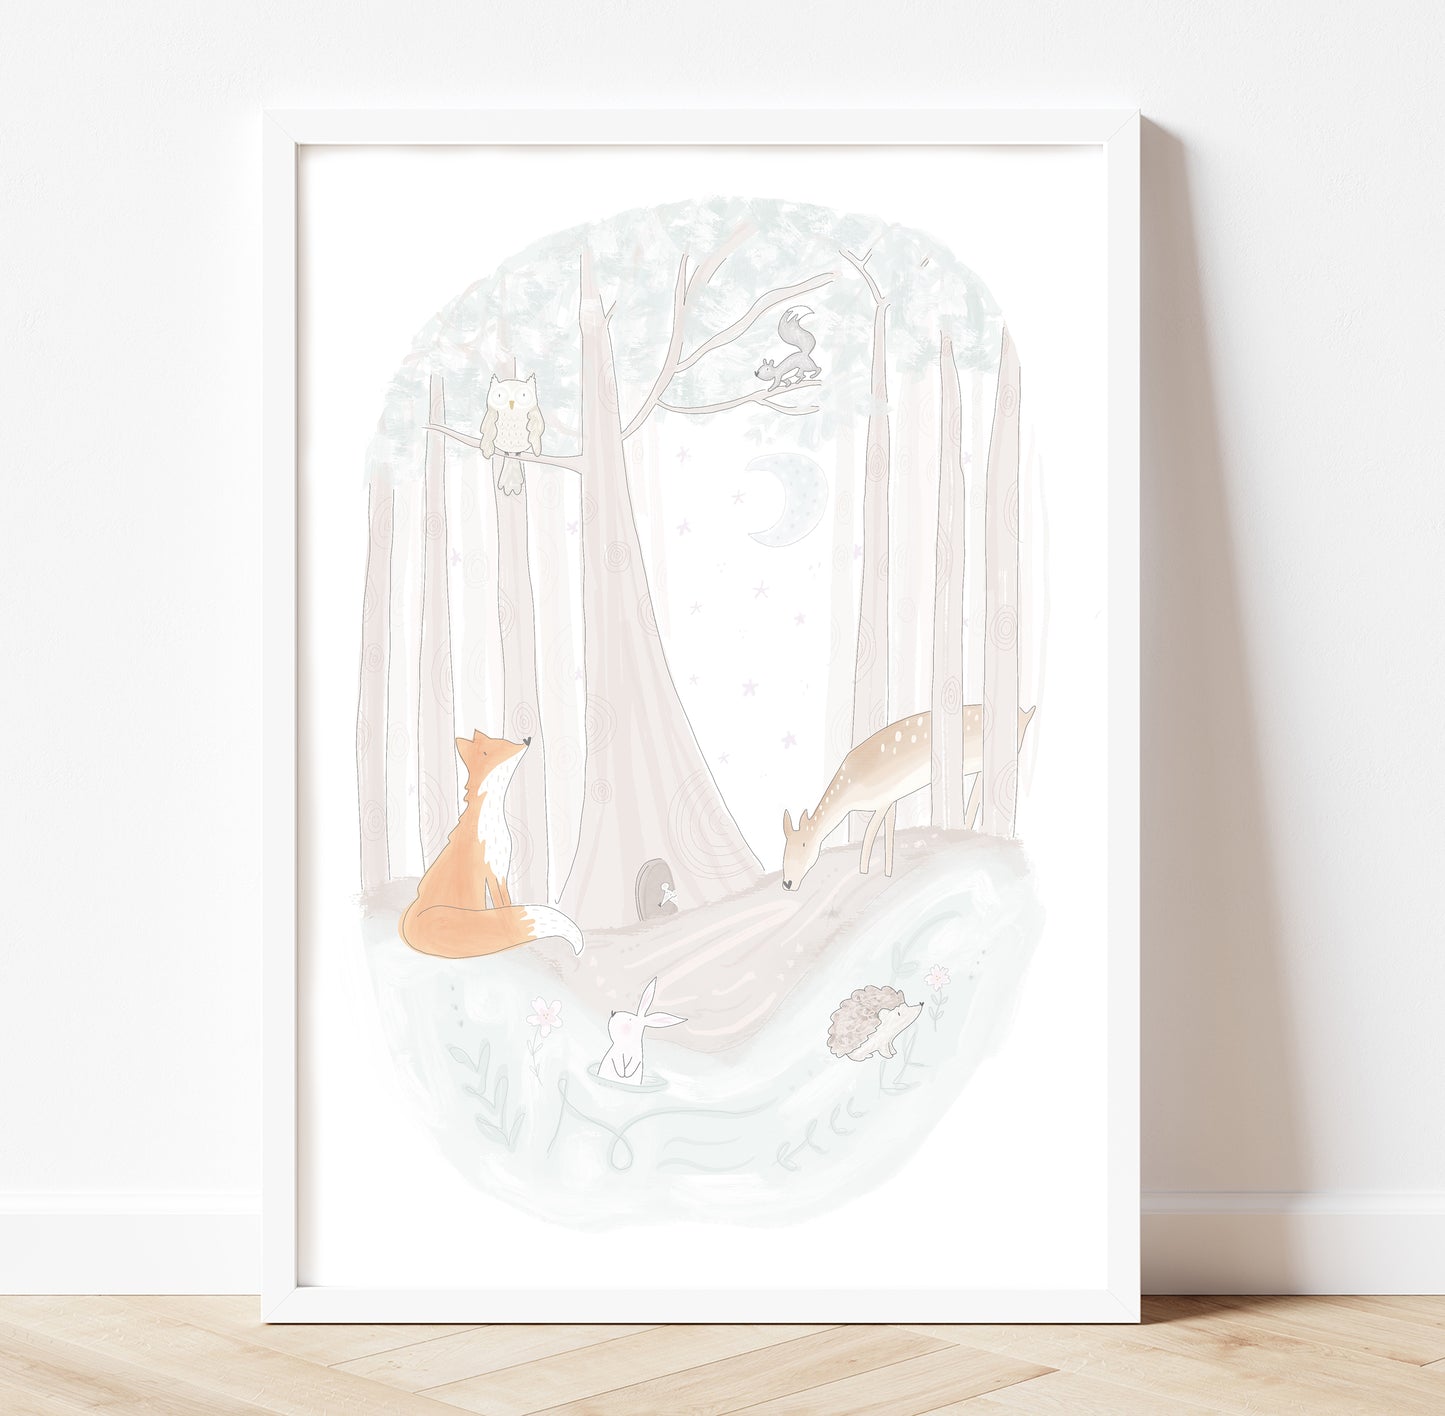 Dreamy woodland nursery illustrated print